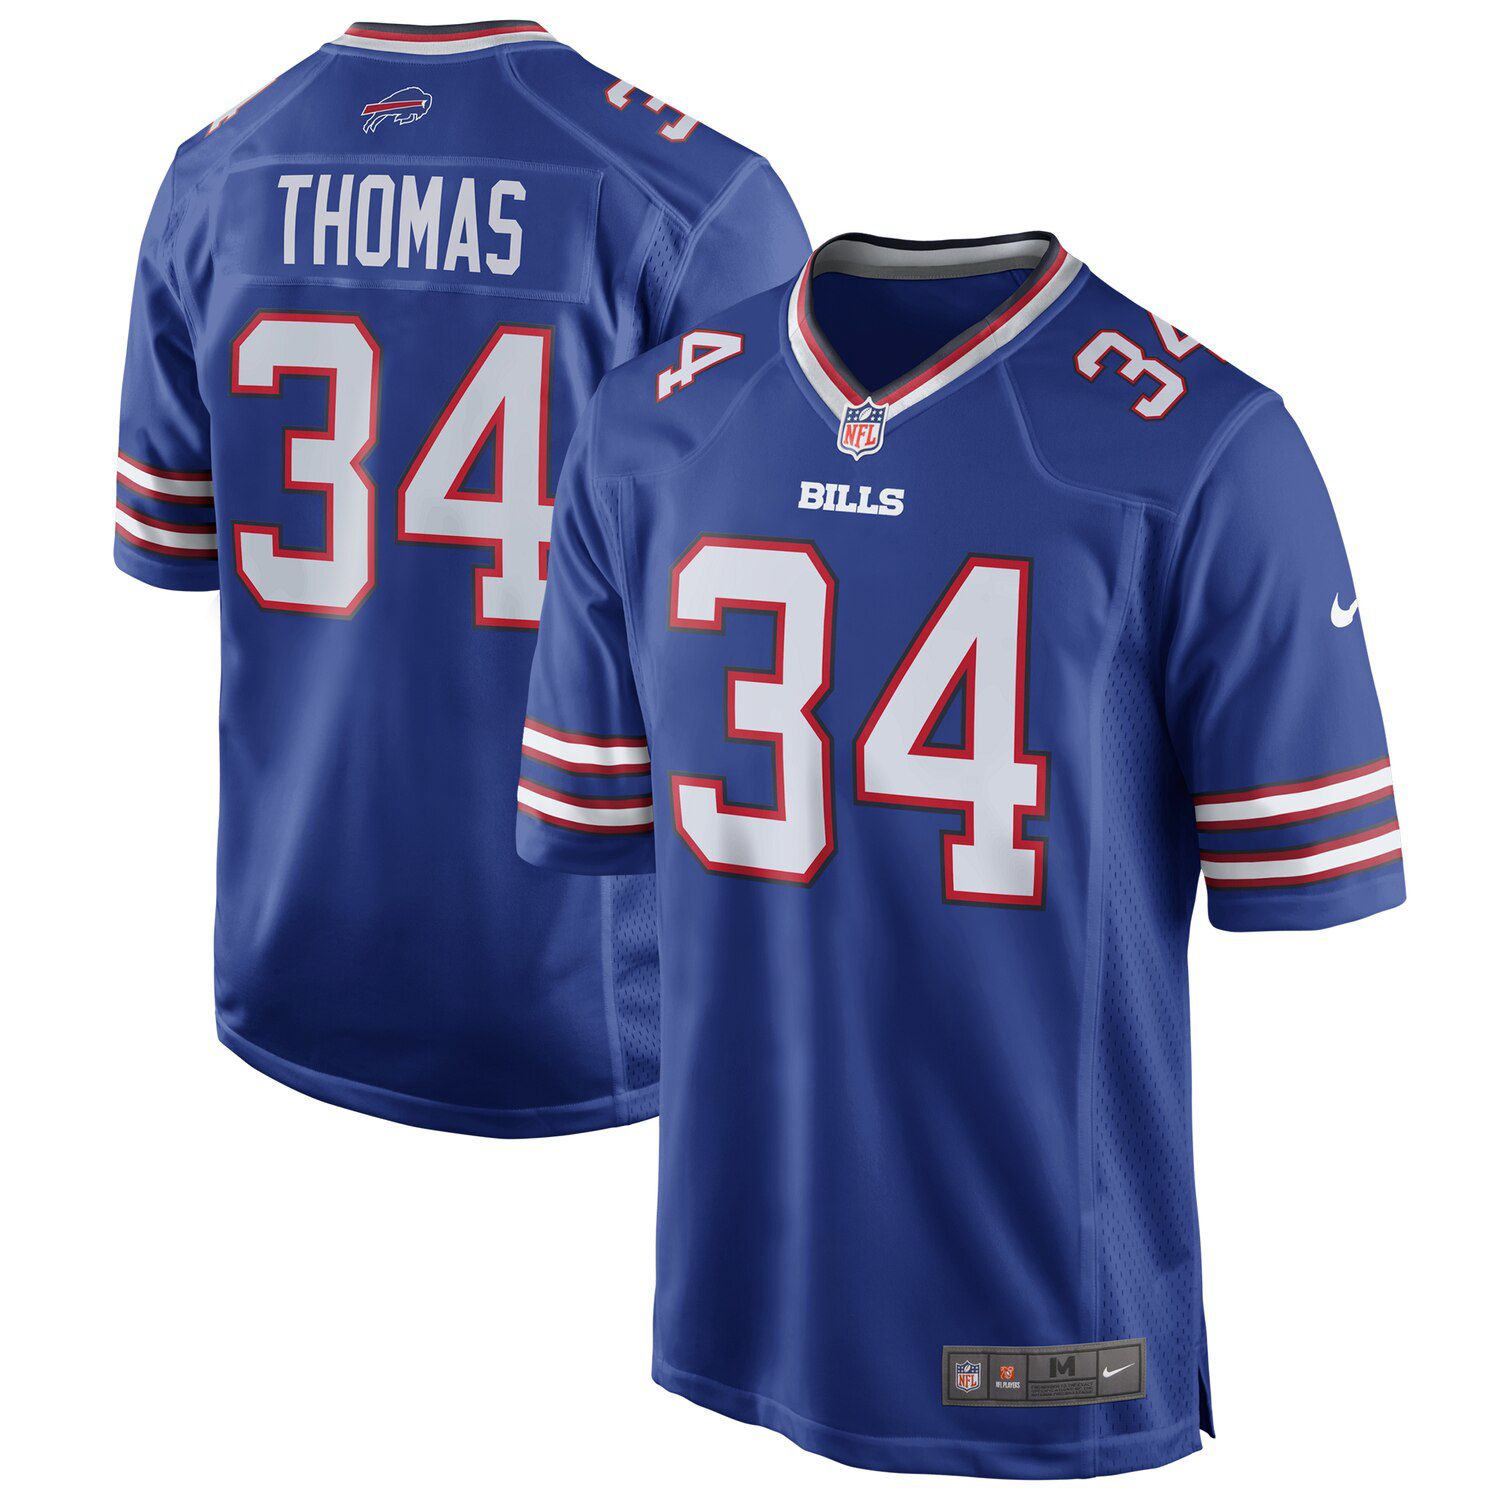 thurman thomas authentic jersey